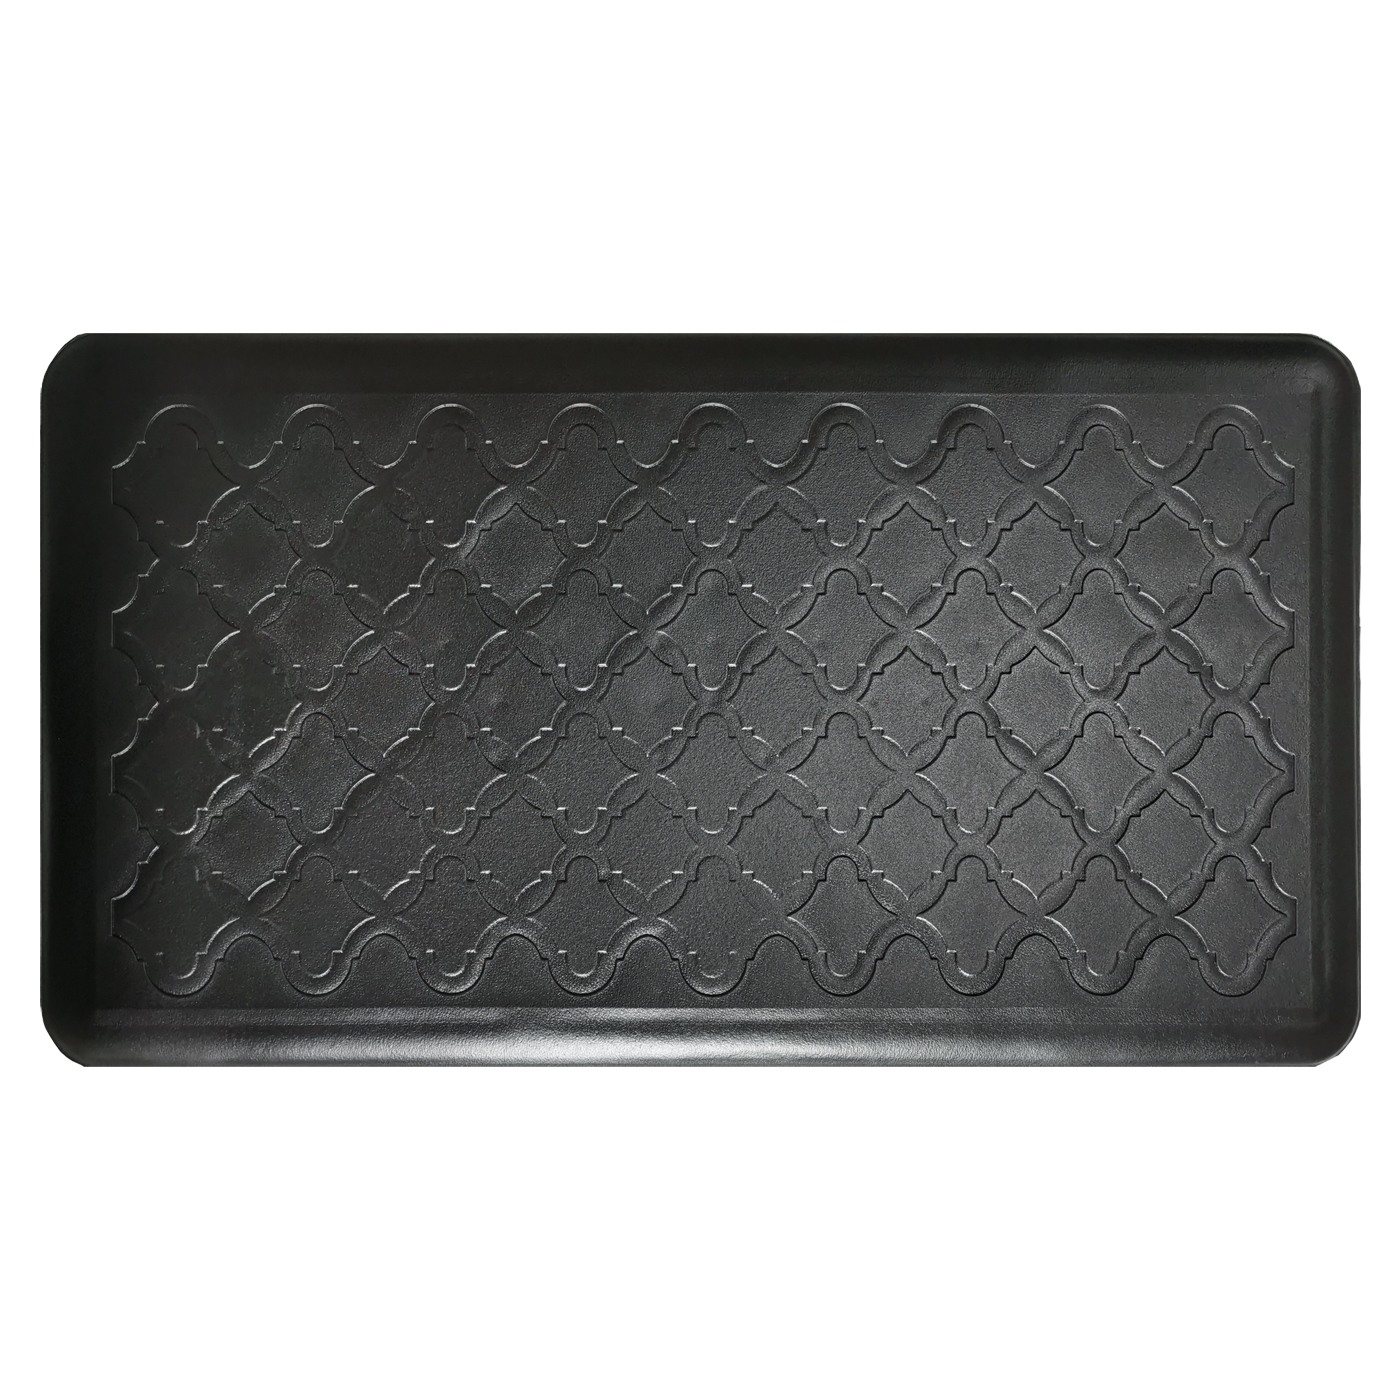 Y12001BB-Art3d Anti Fatigue Mat - 1/2 Inch Cushioned Kitchen Mat - Non Slip  Foam Comfort Cushion for Standing Desk, Office or Garage Floor (17.3x28